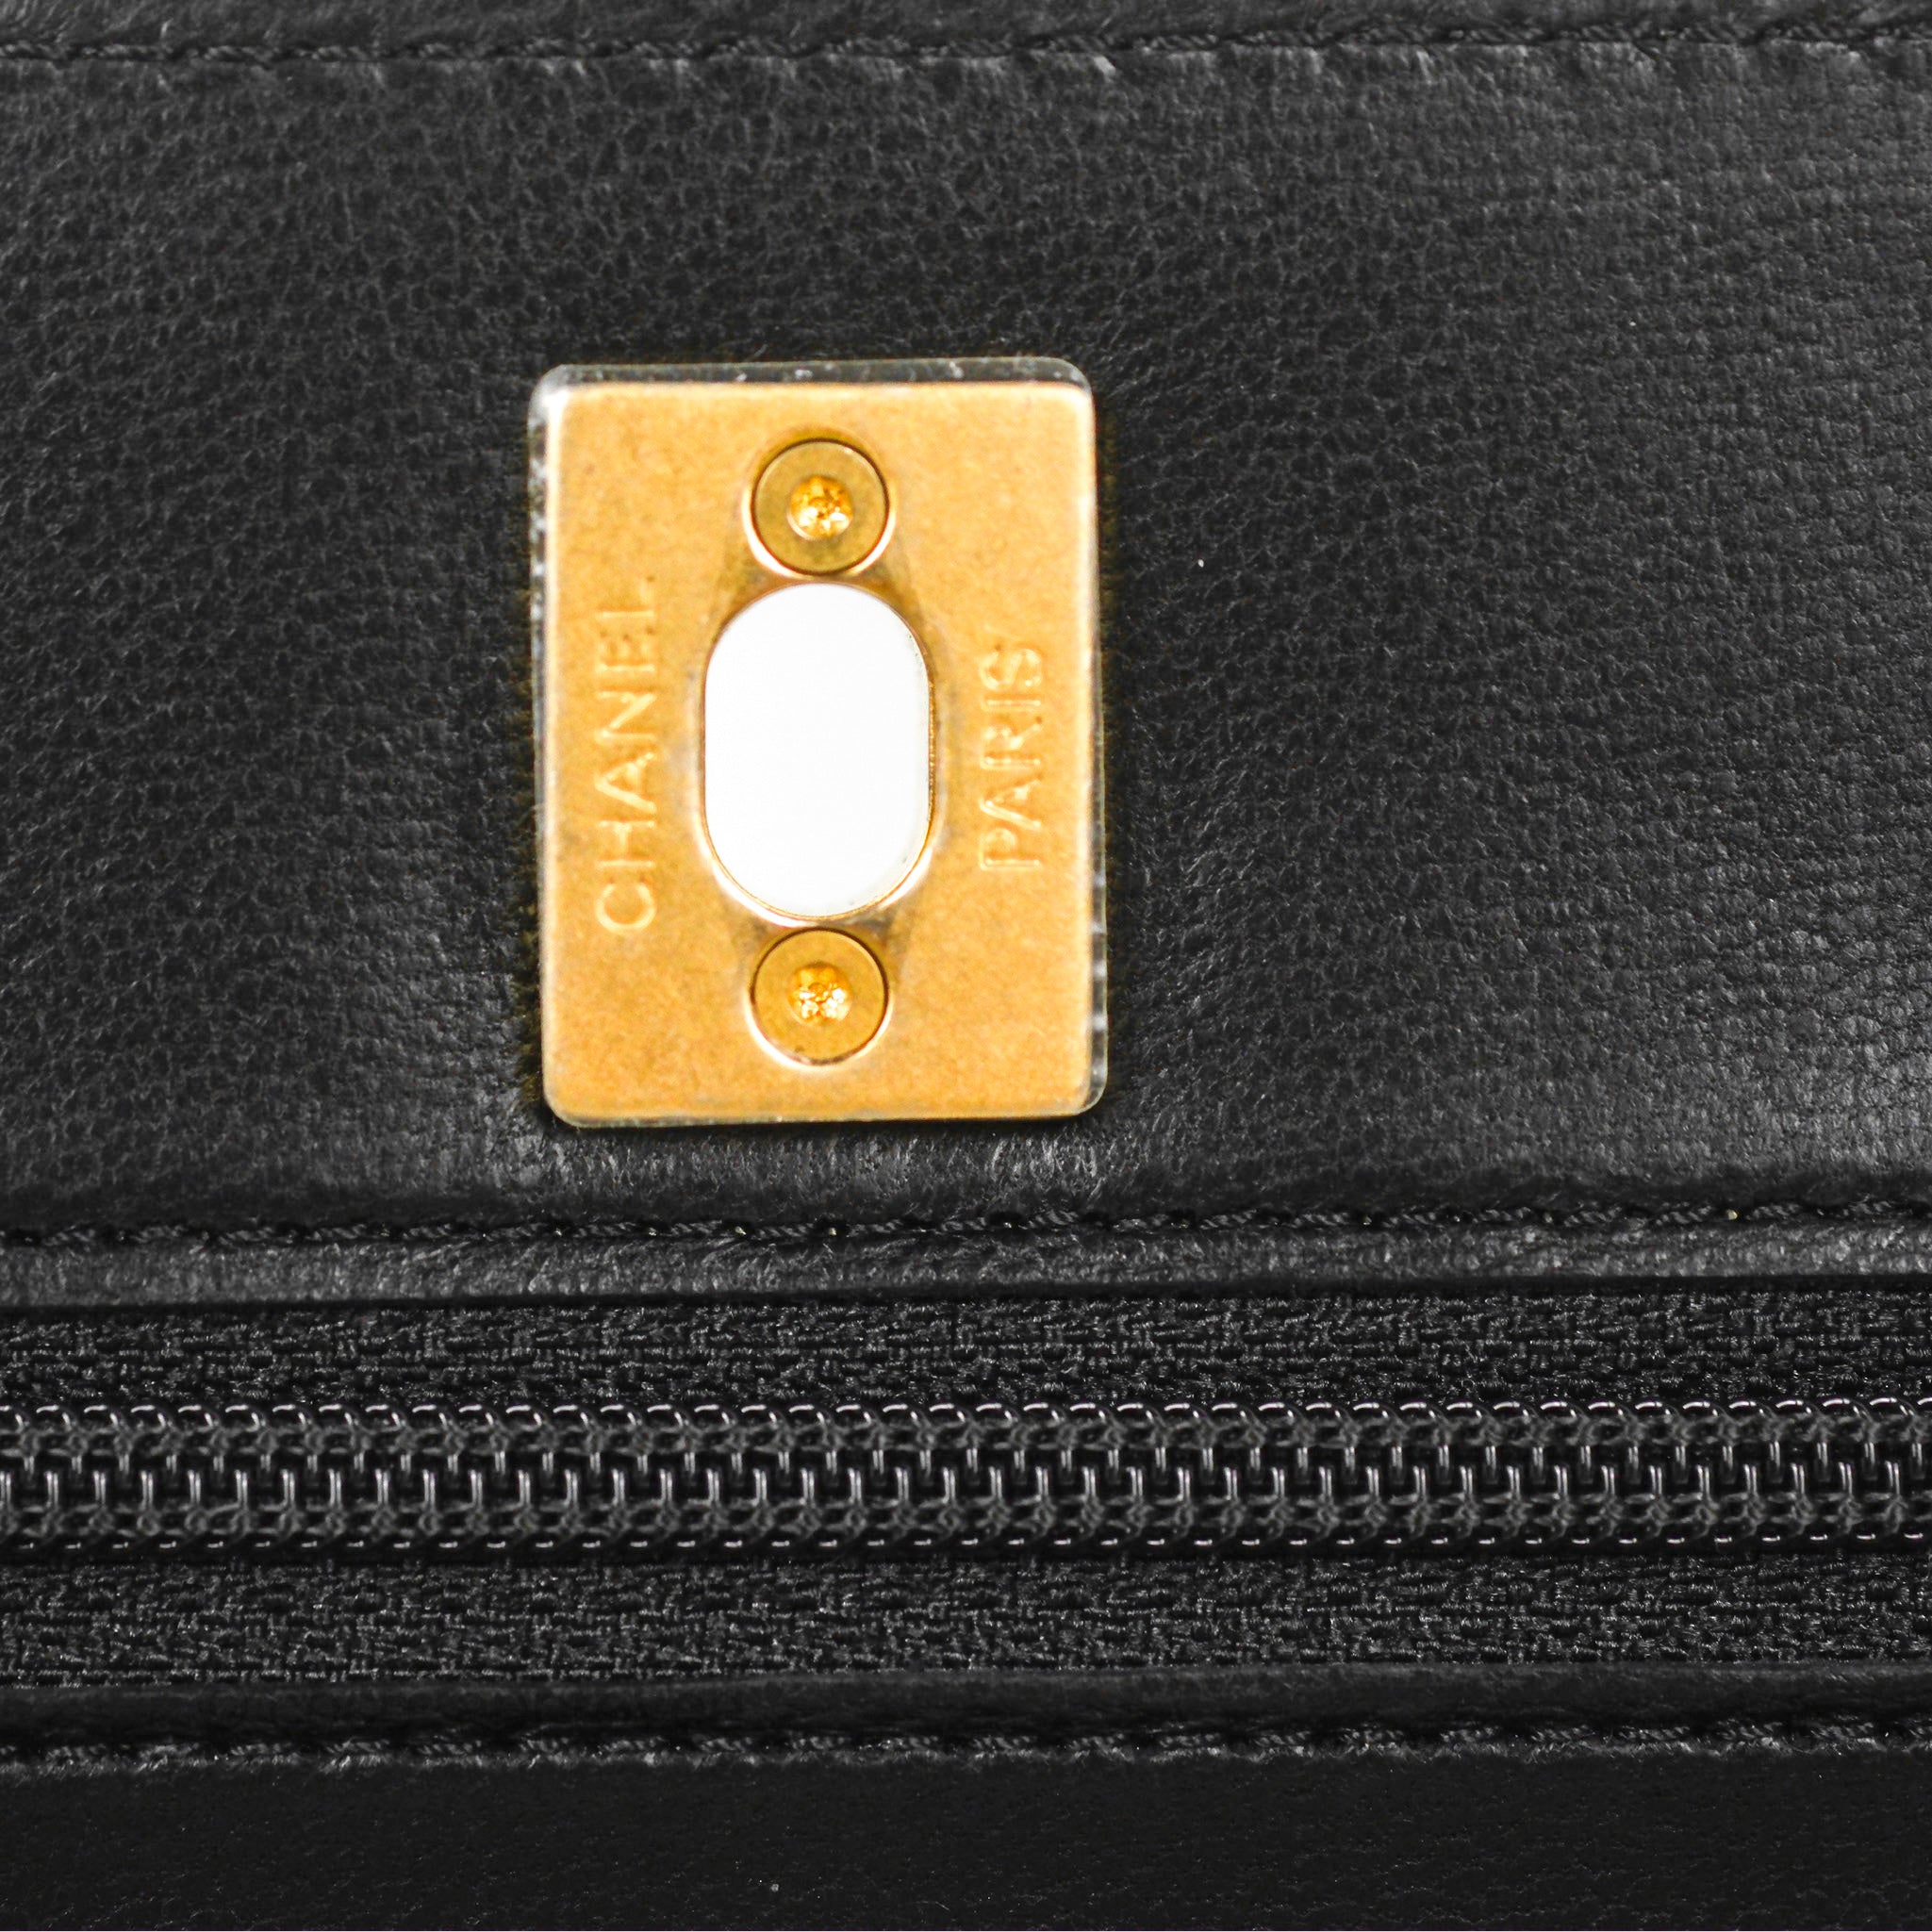 Baggie of Louis Vuitton Screws Zippers Purse Hardware